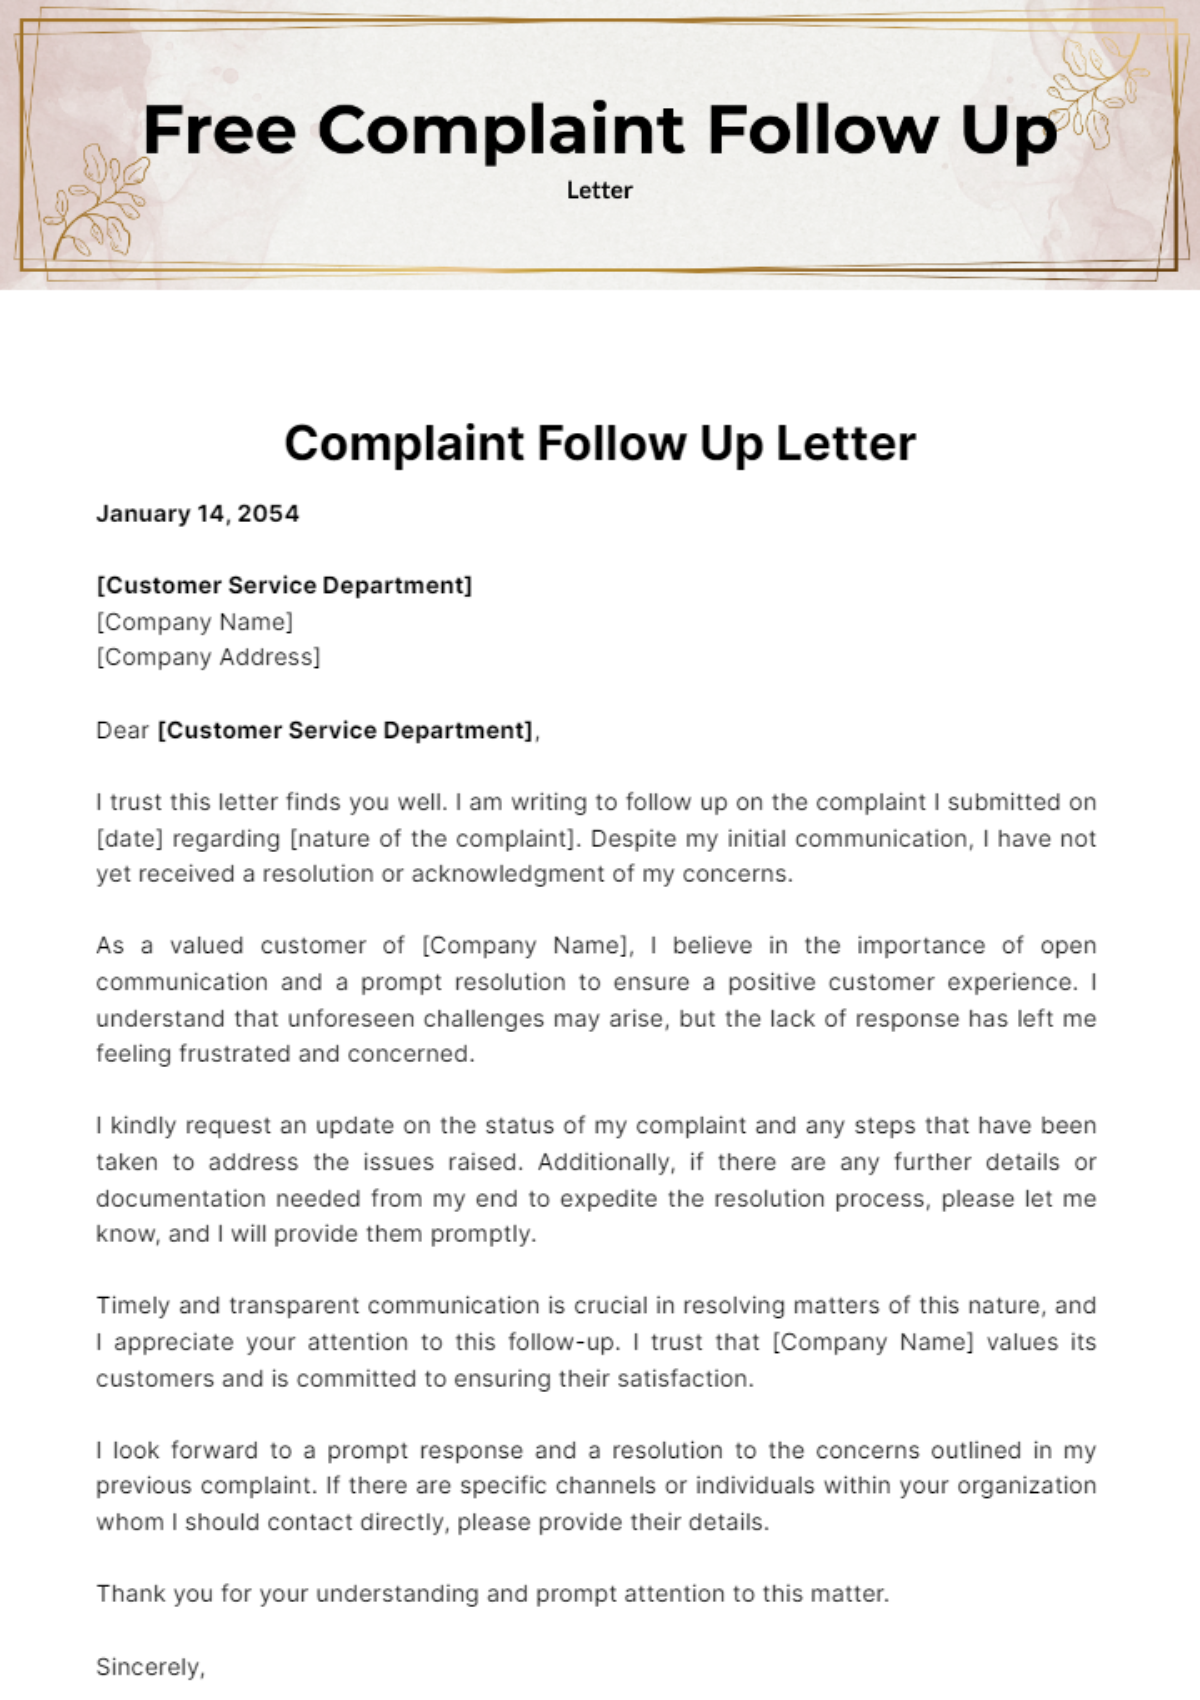 Free Complaint Follow Up Letter Template